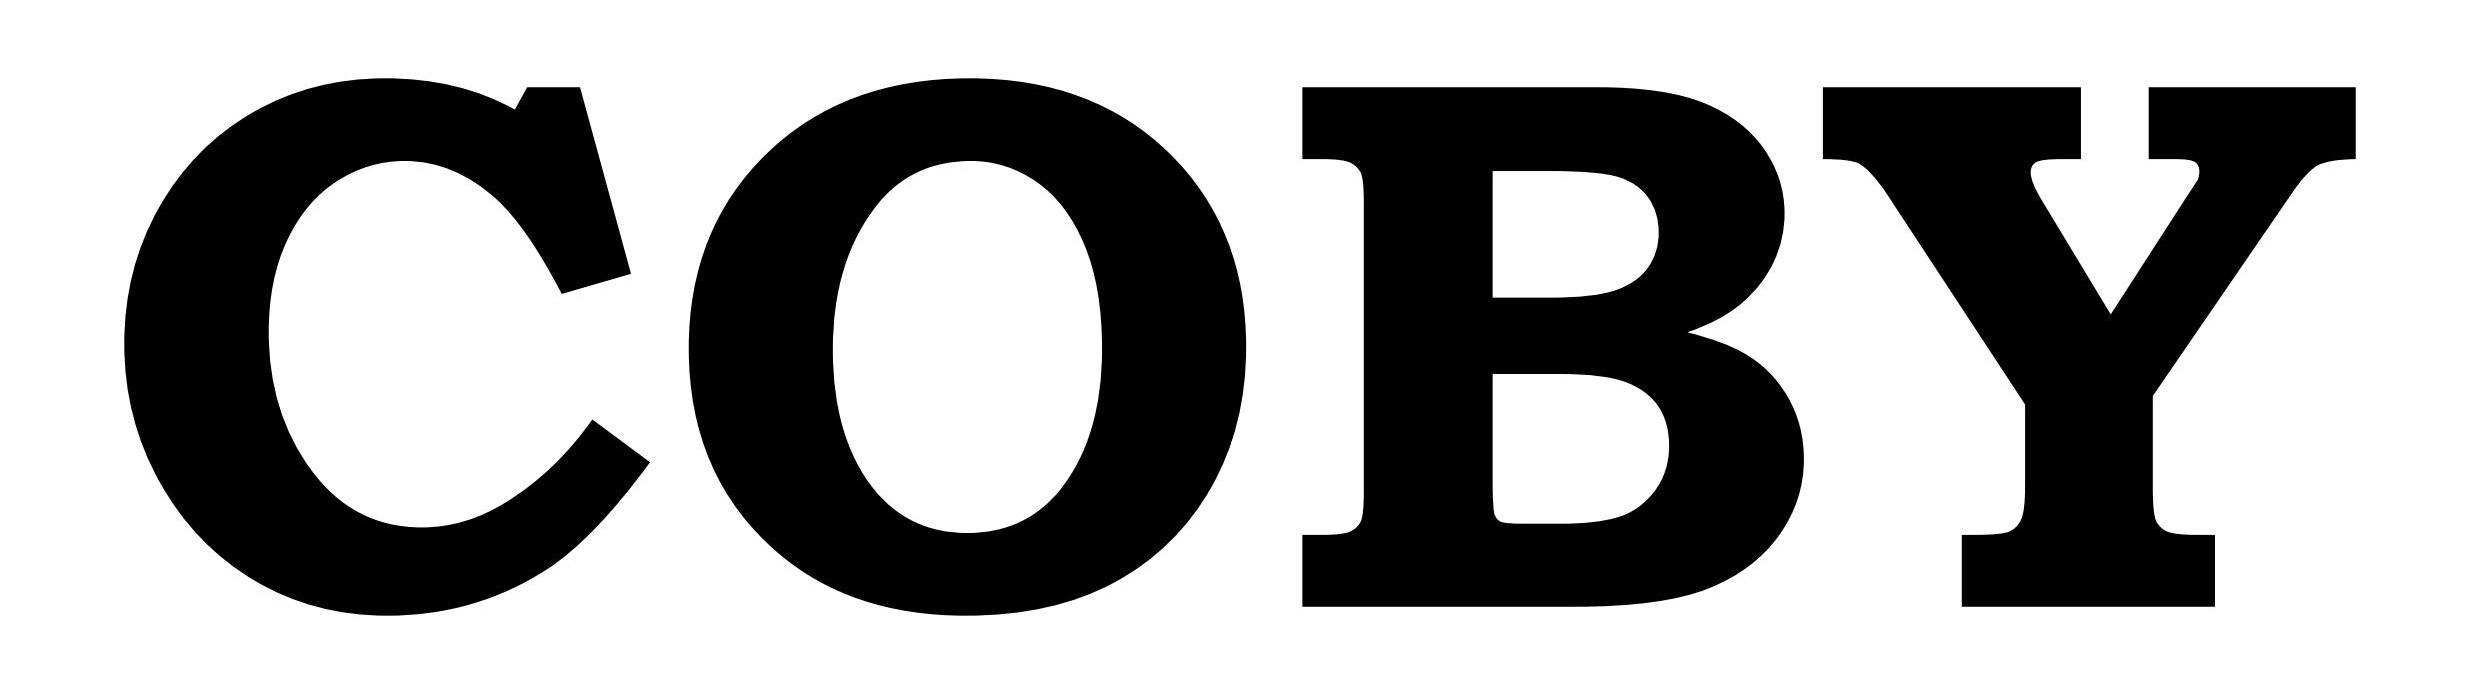 coby logo